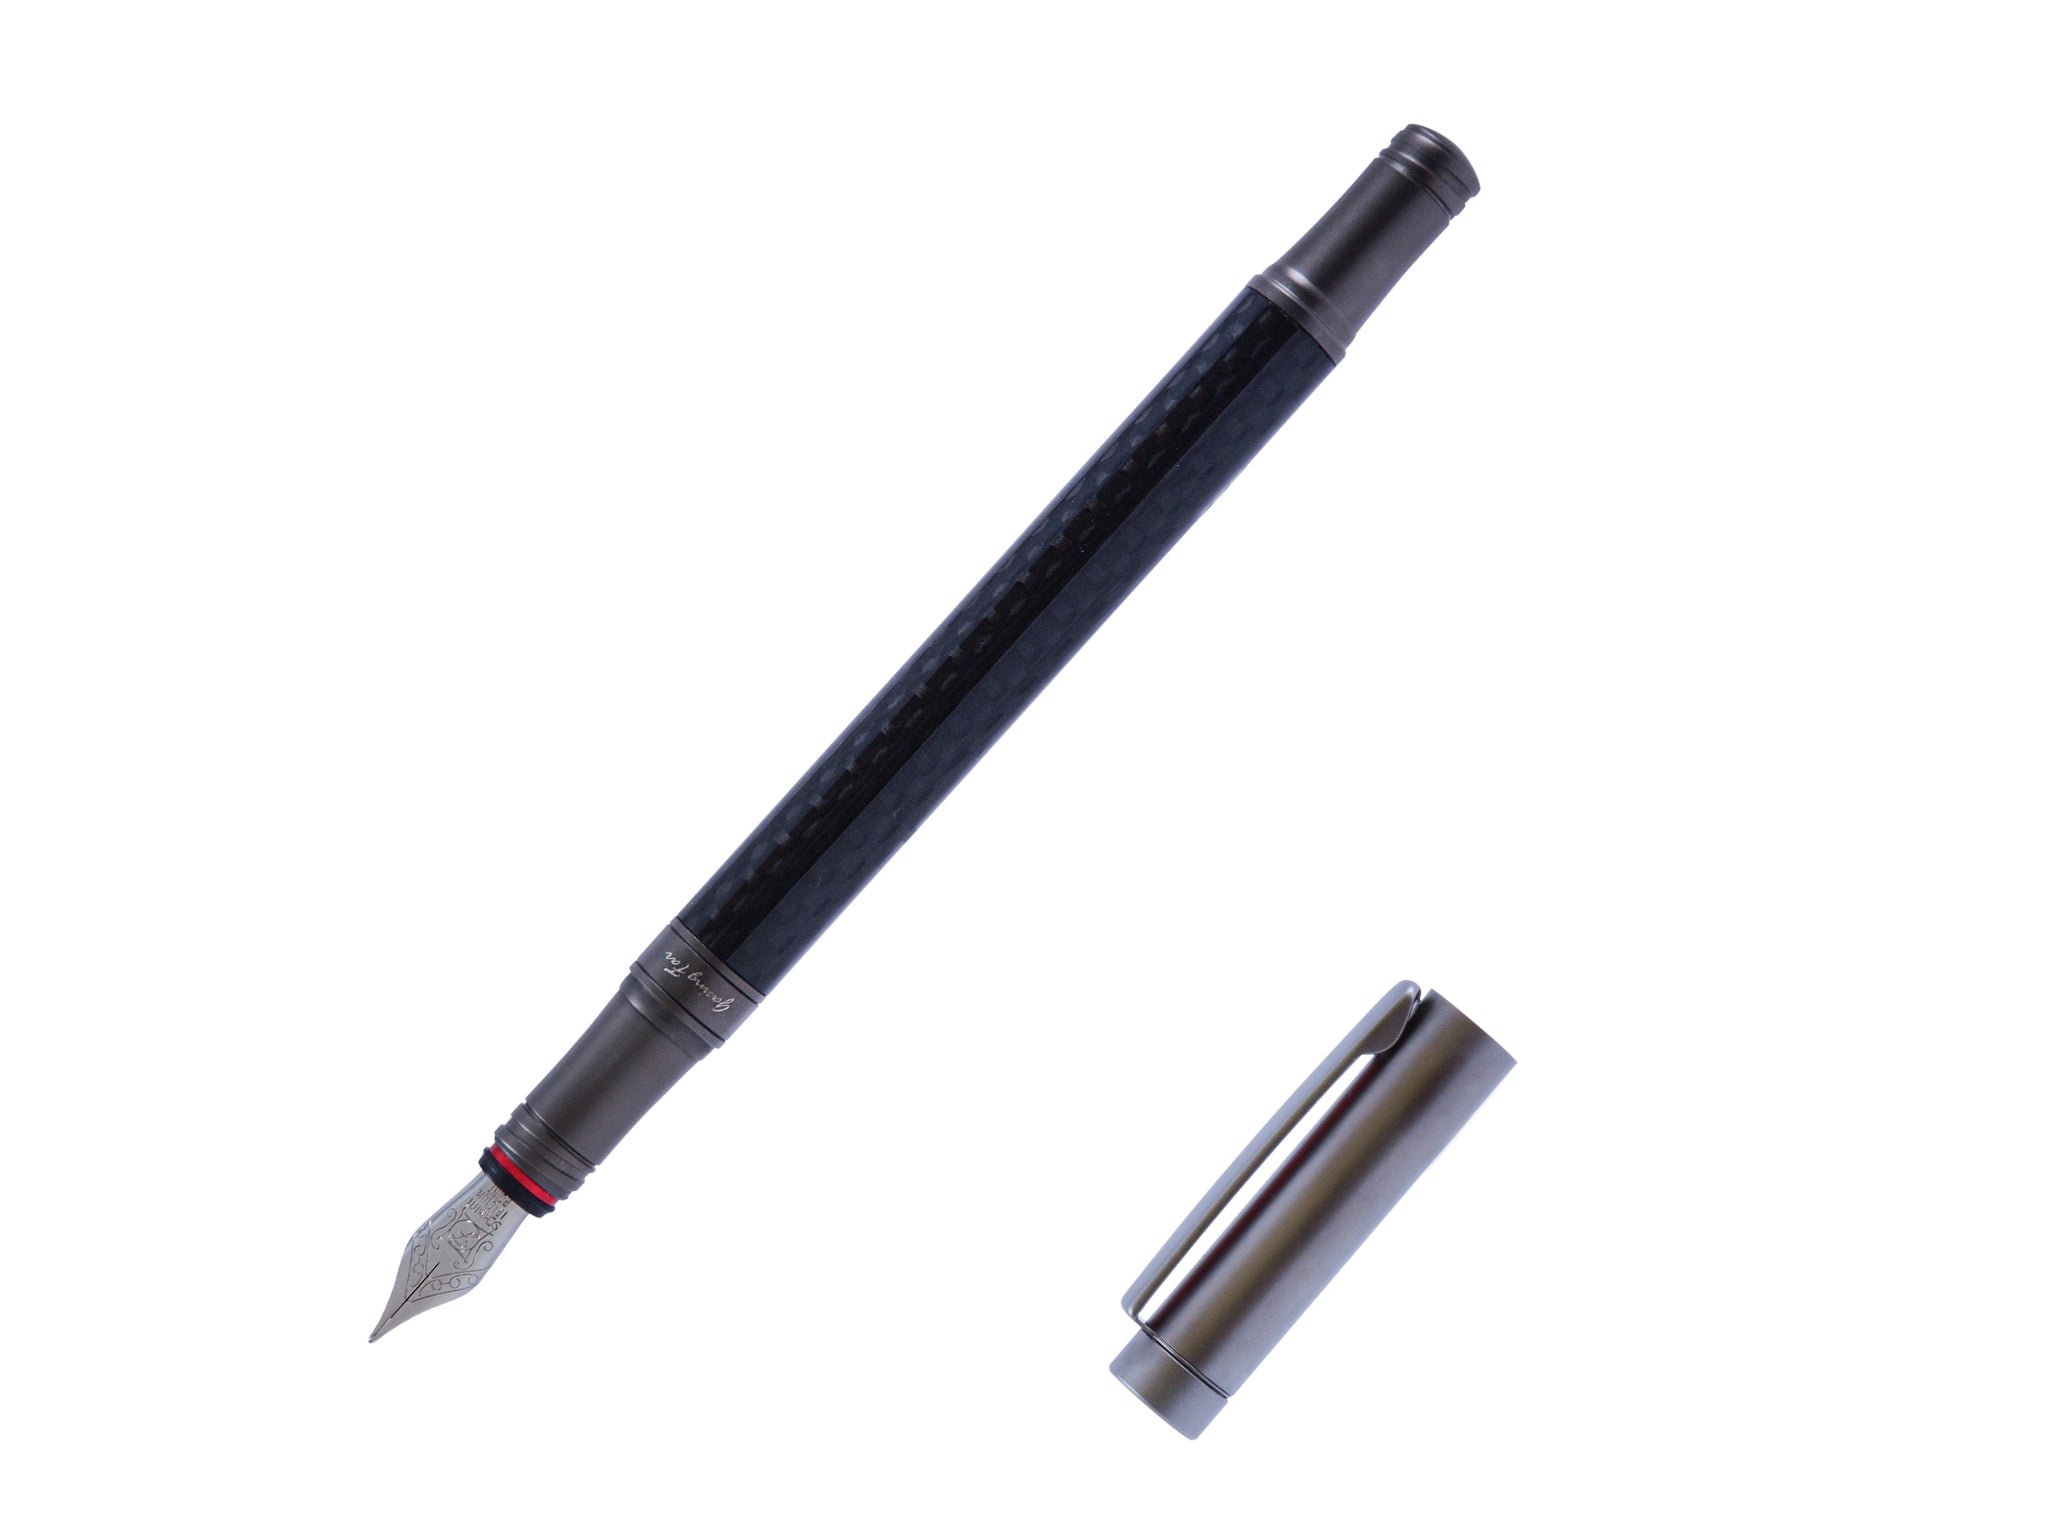 tm2™ Fountain Pen, BLACK Edition